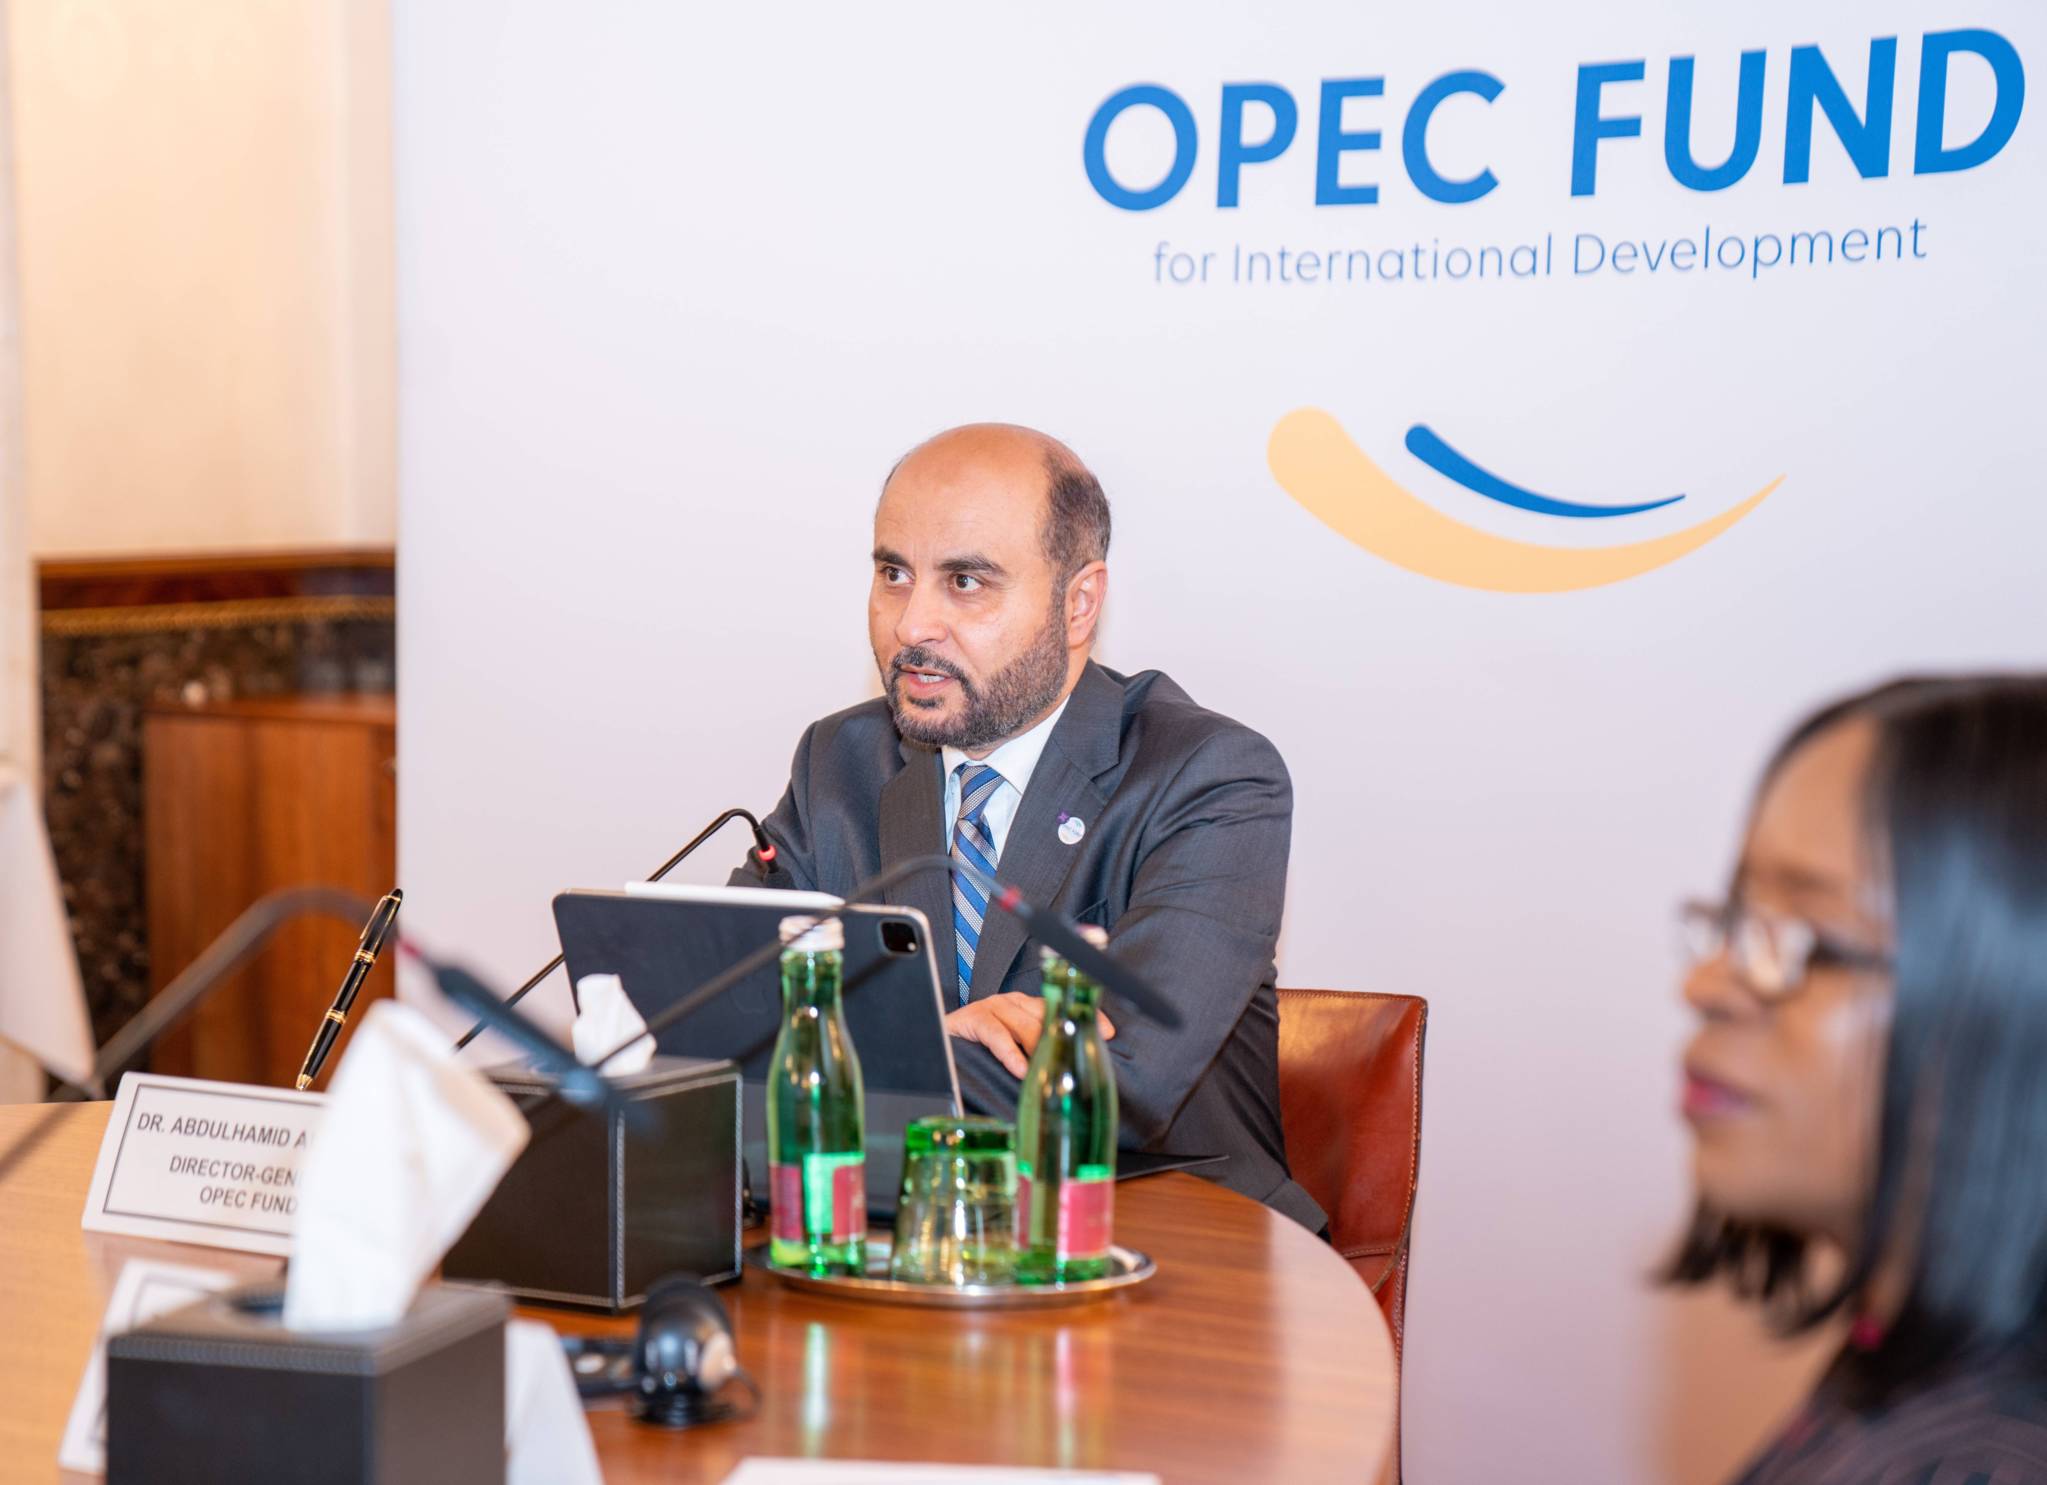 OPEC Fund Director-General Abdulhamid Alkhalifa